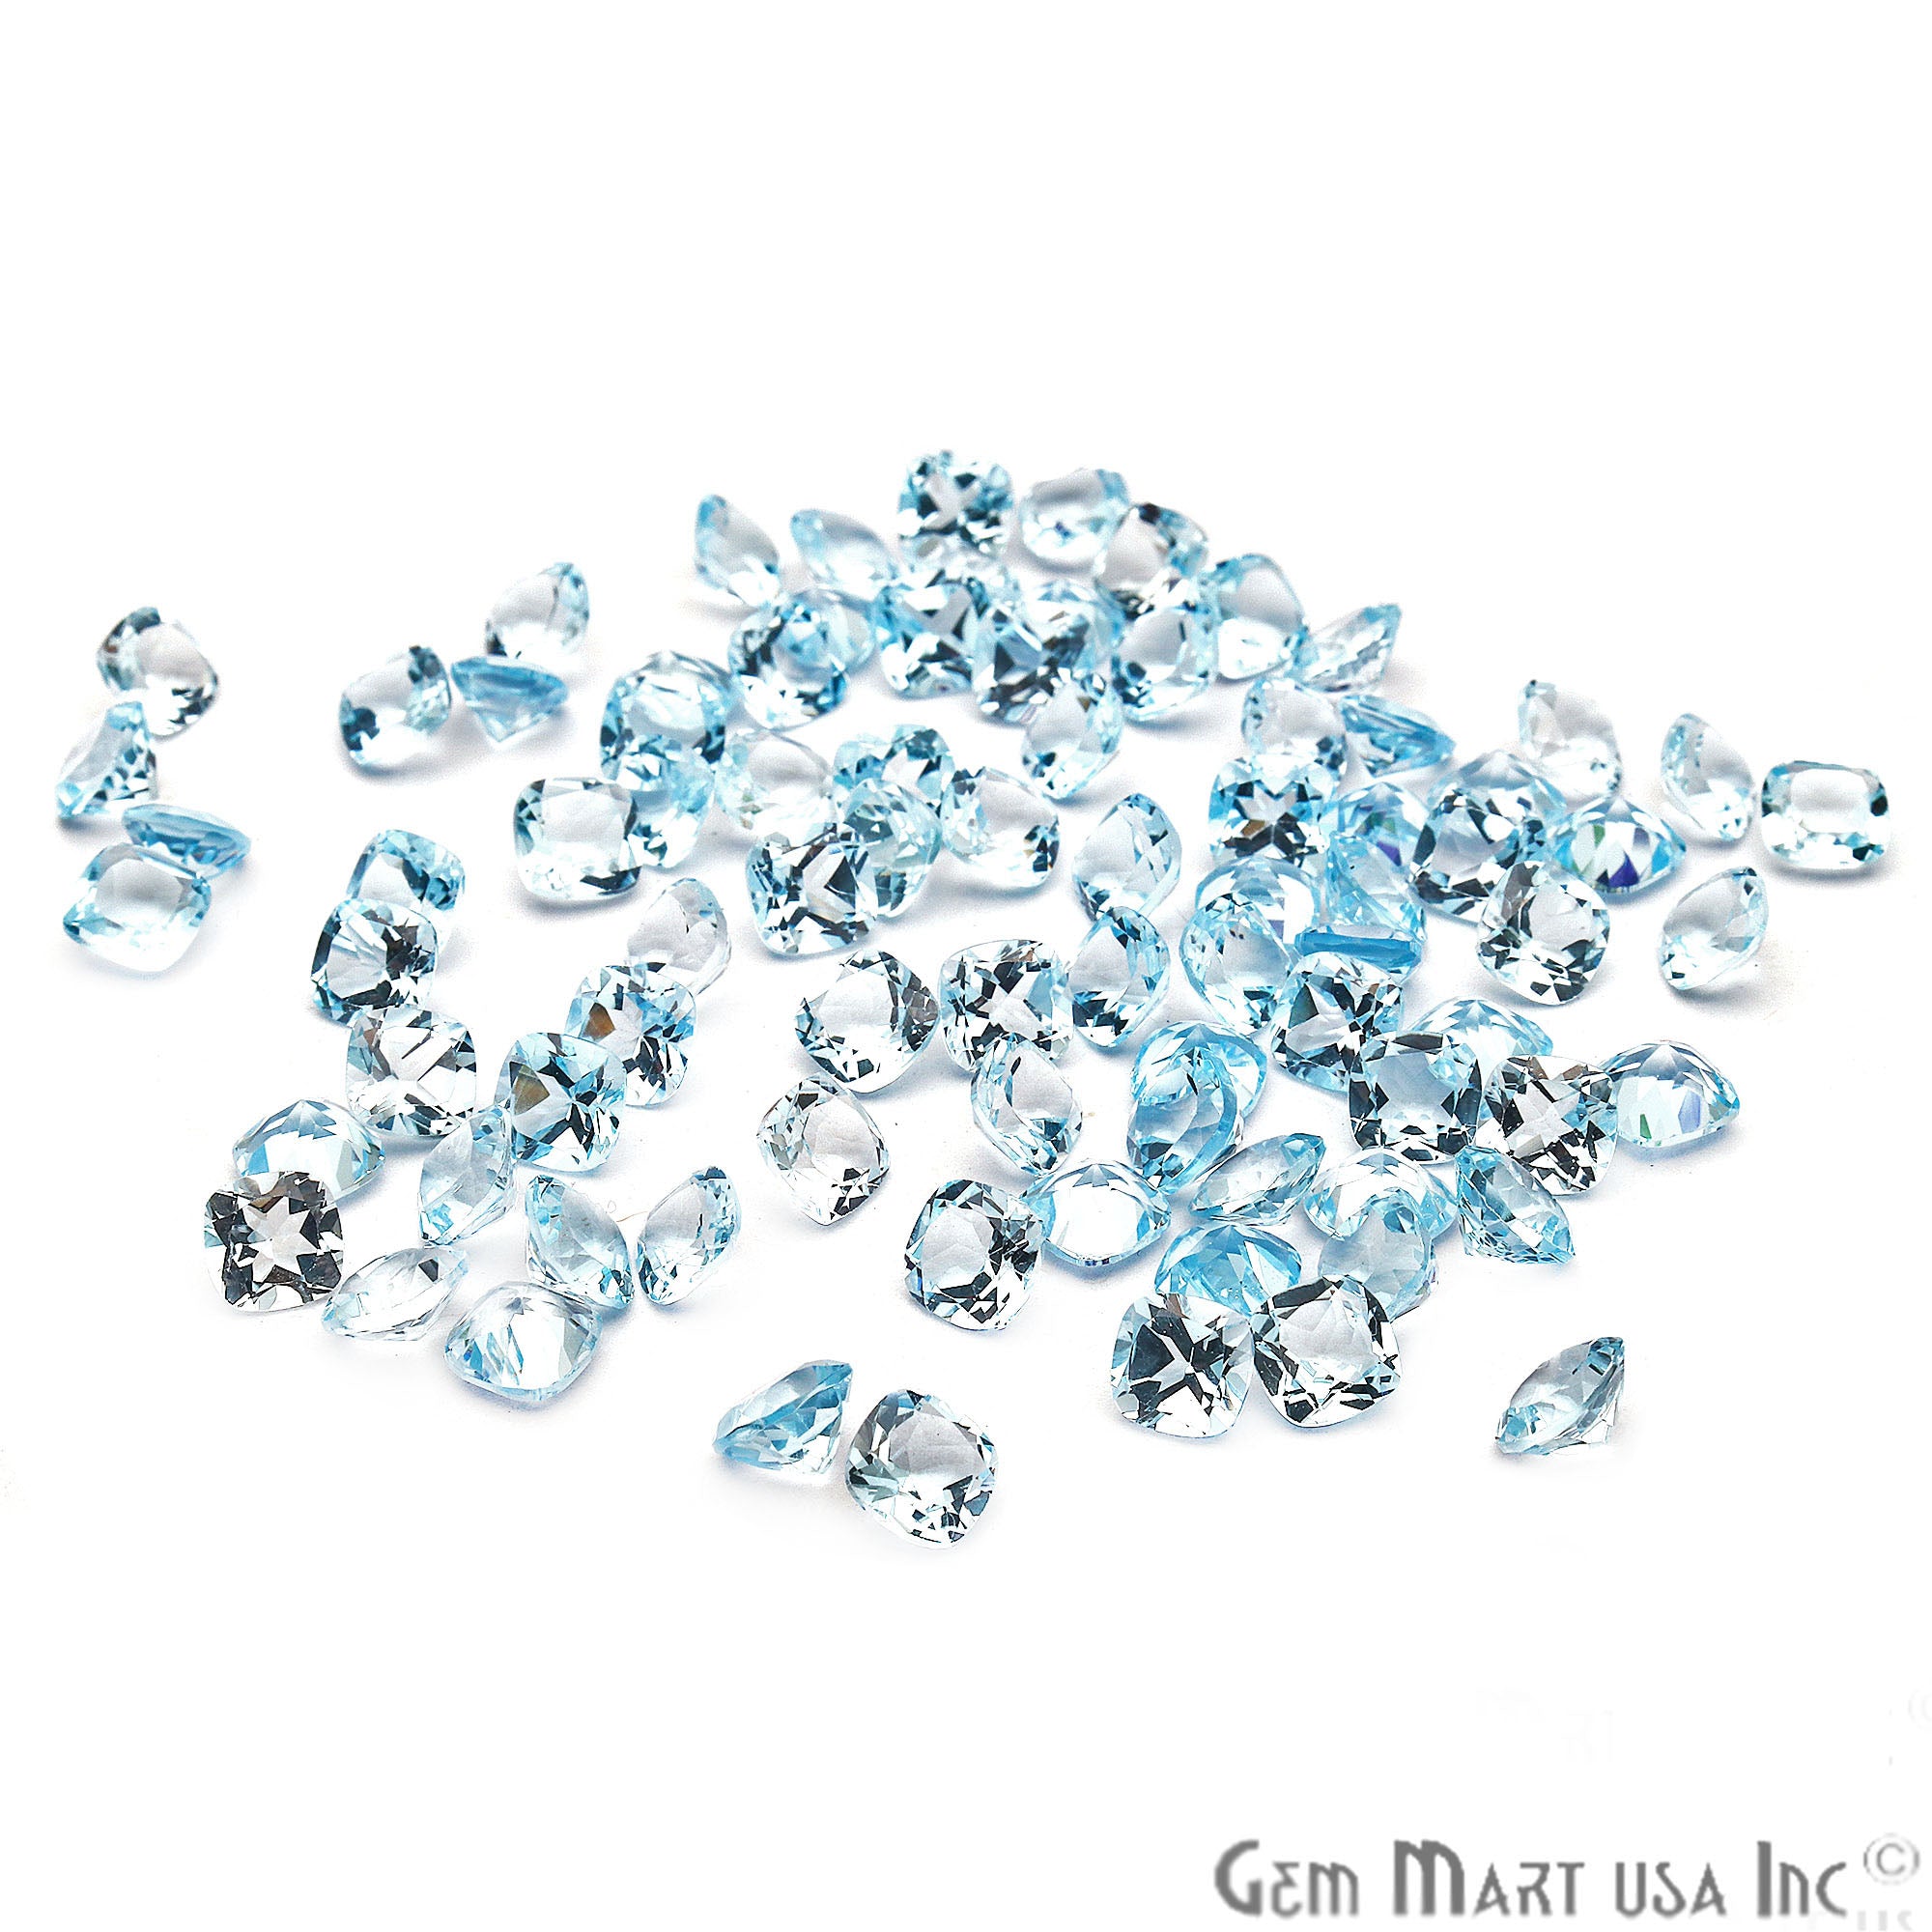 Blue Topaz Cushion Shape 6mm Faceted Loose Gemstone - GemMartUSA